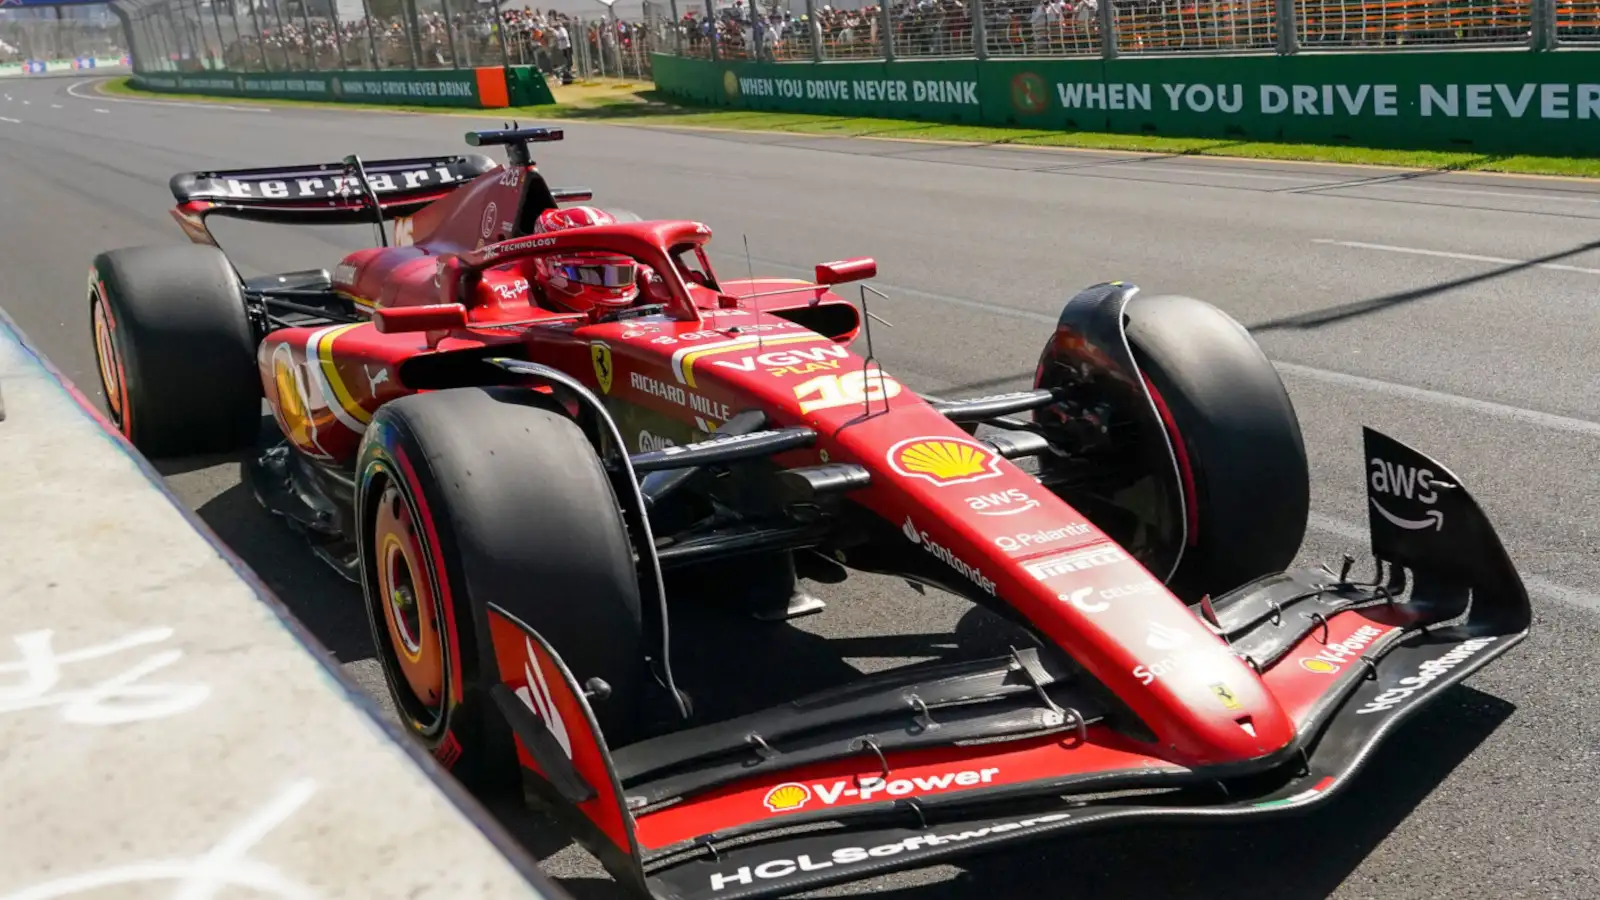 Ferrari driver Charles Leclerc running close to the wall